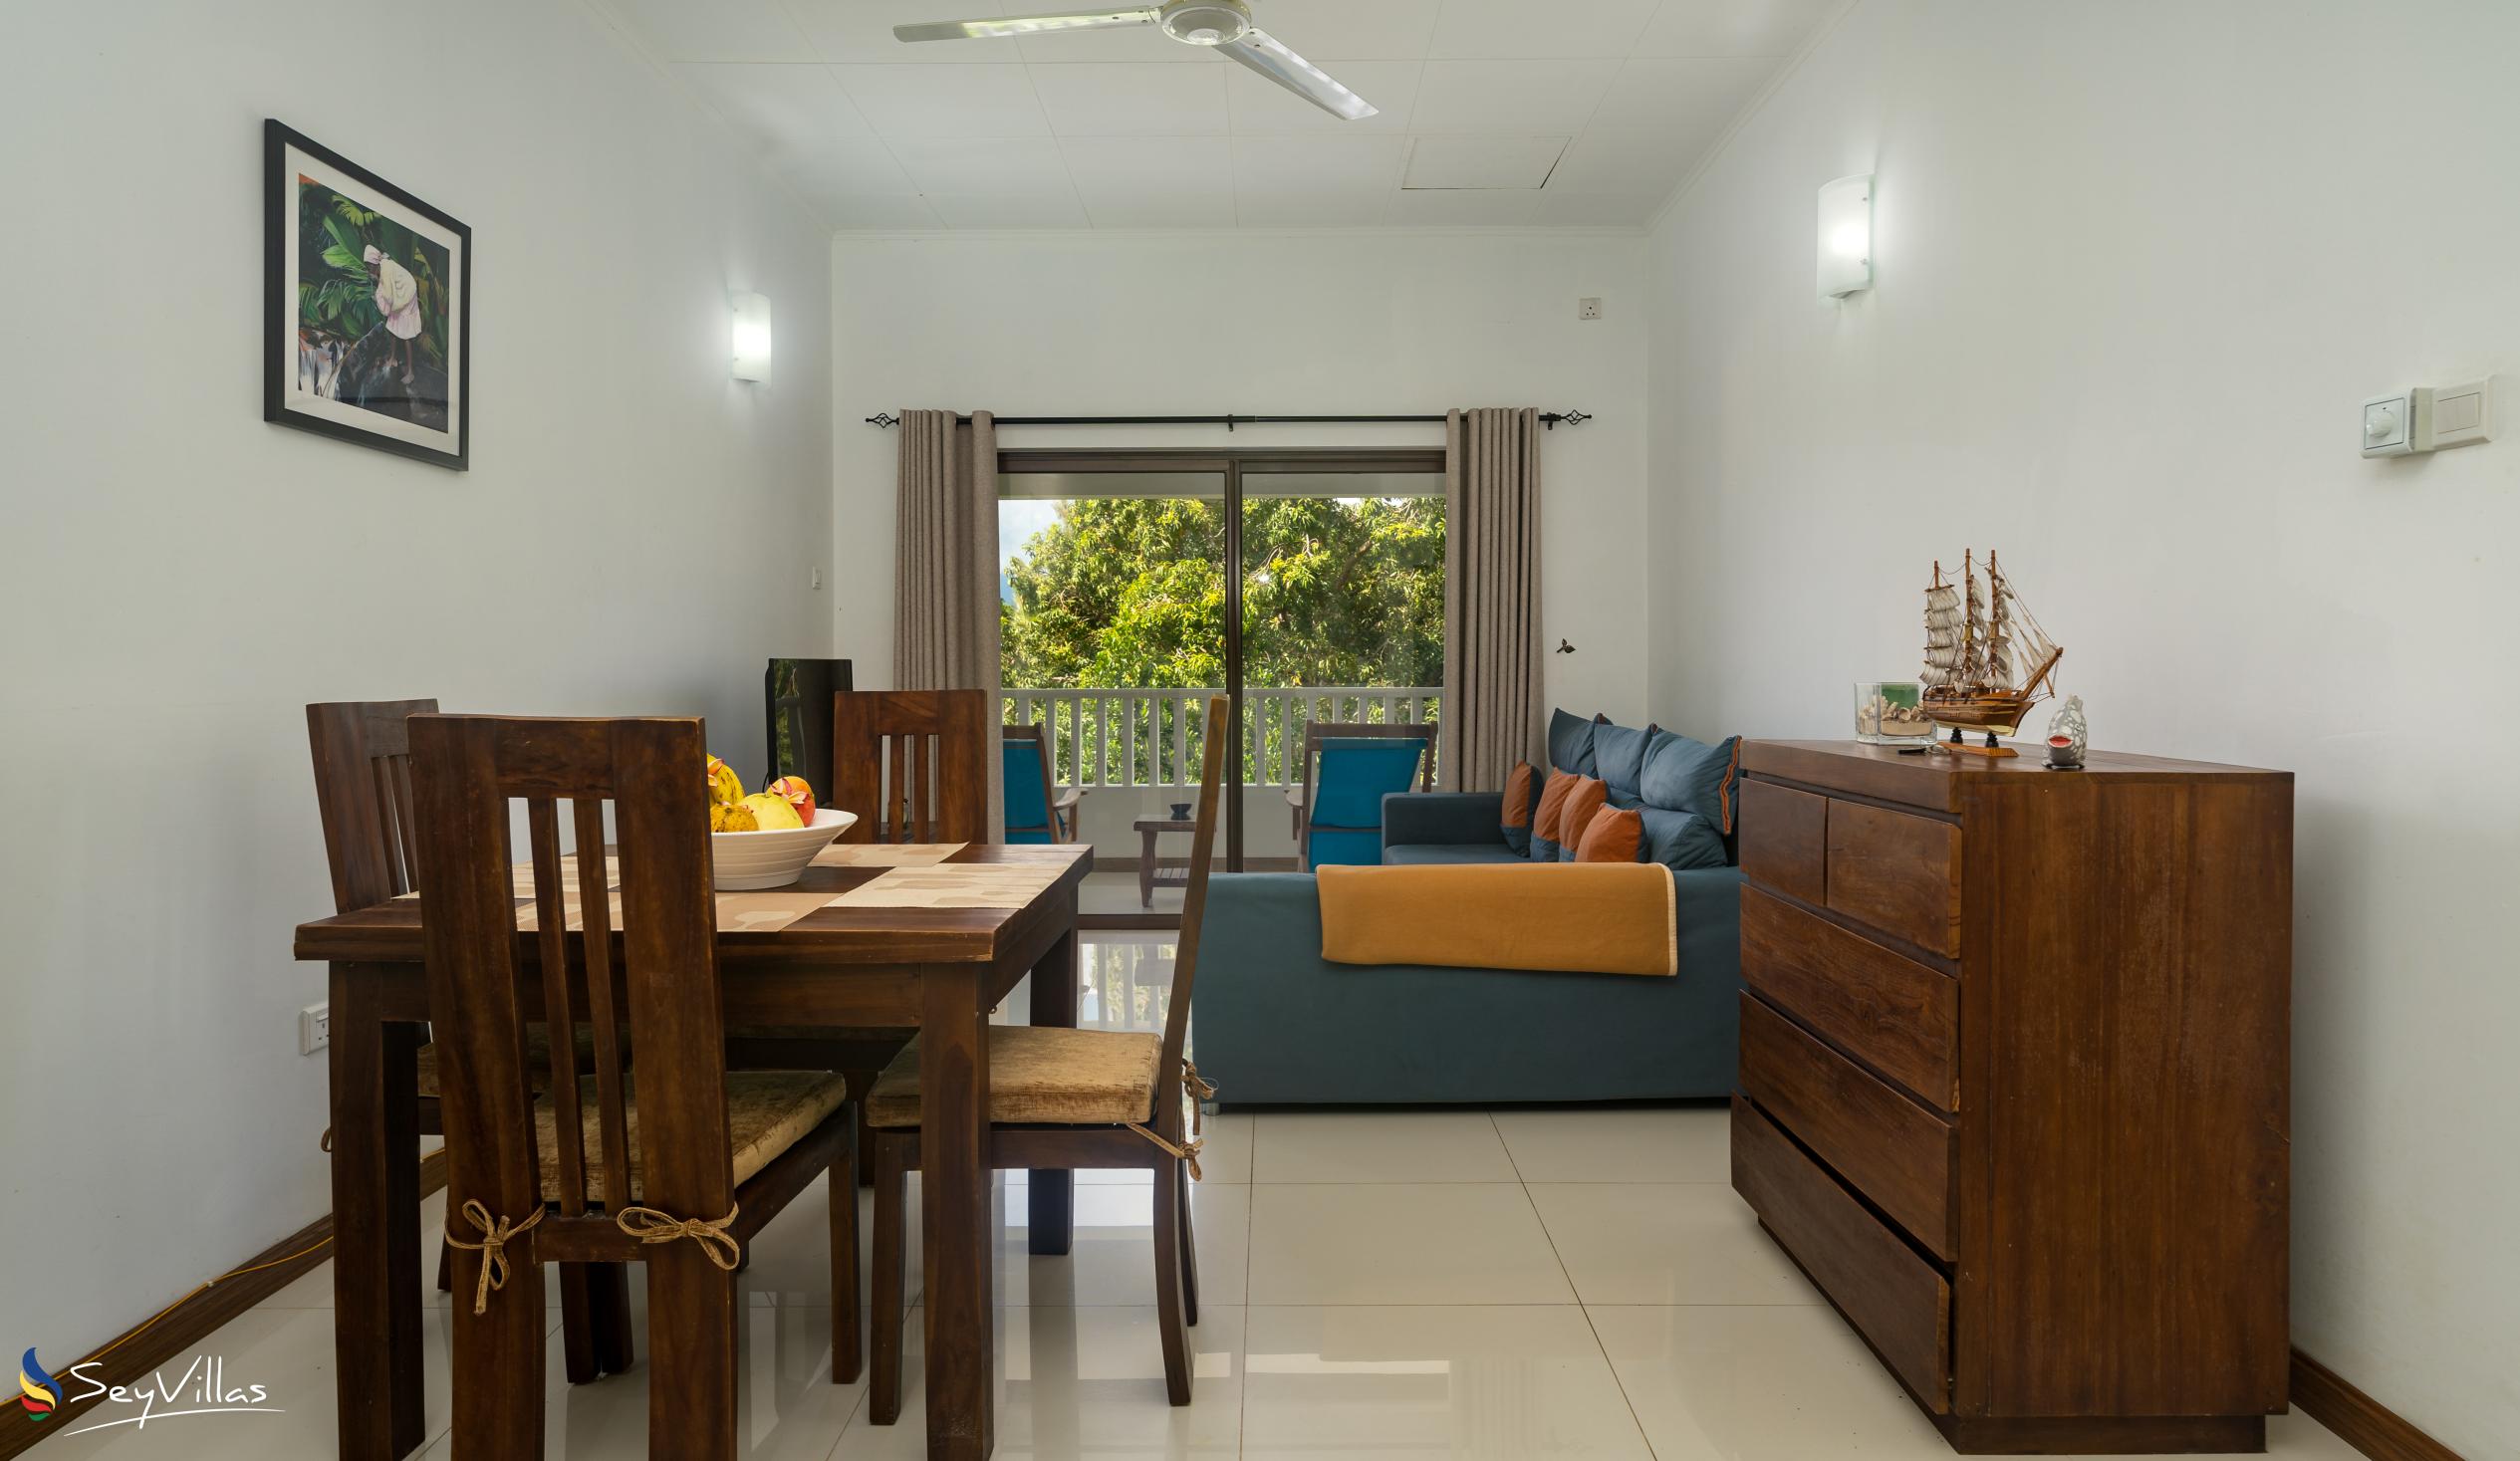 Foto 68: Kanasuk Self Catering Apartments - Appartement Tamarin 1 chambre - Mahé (Seychelles)